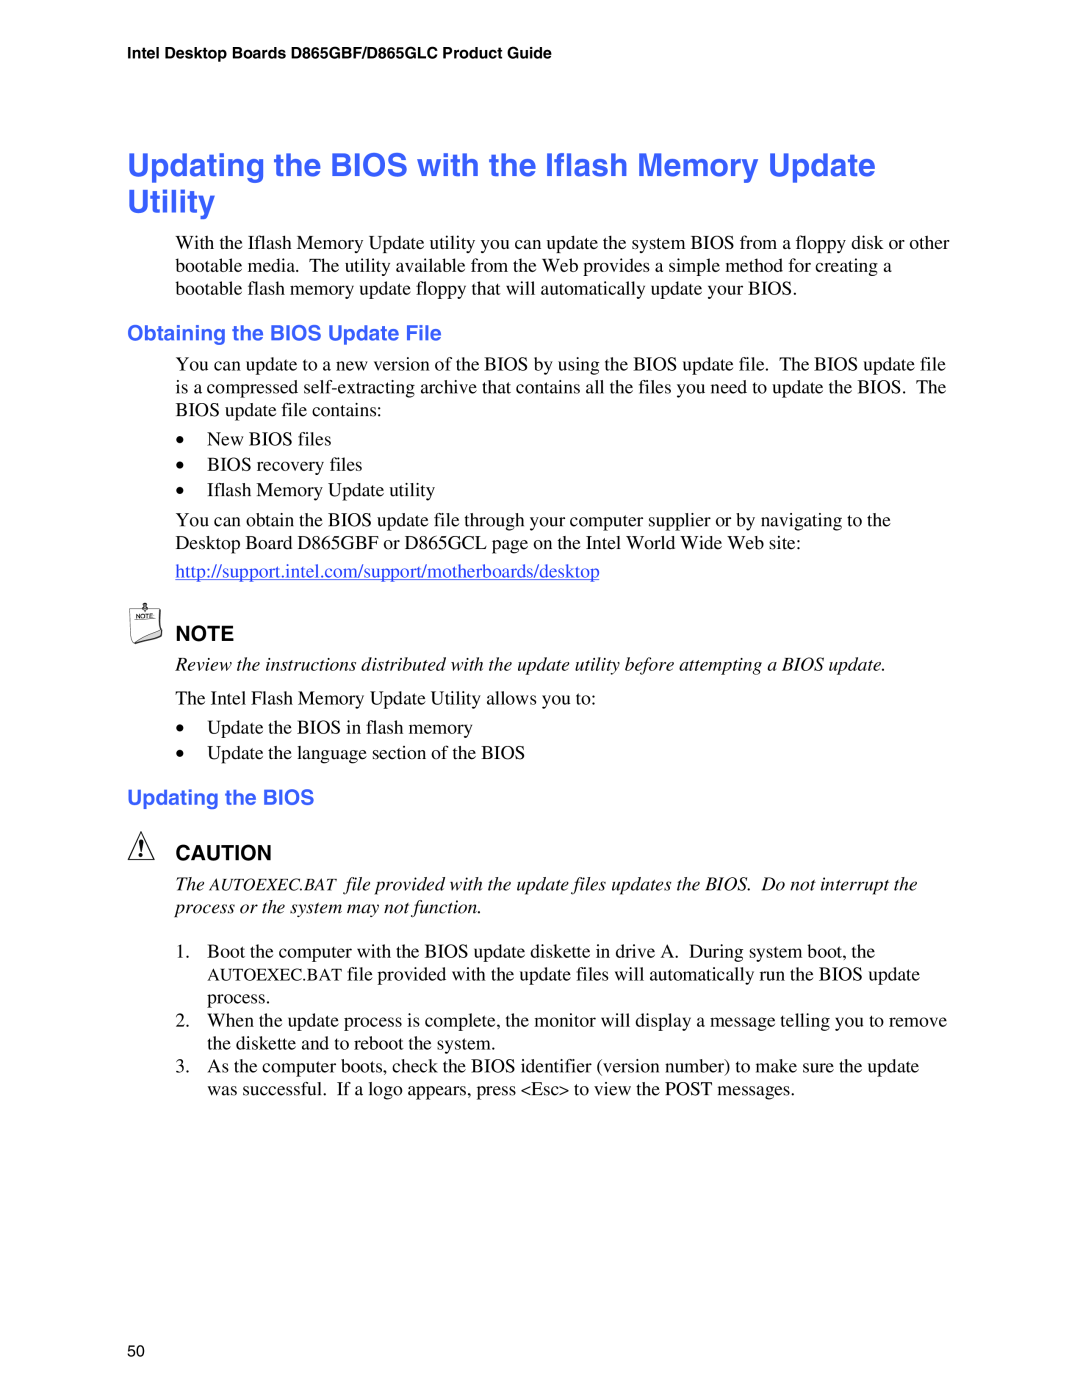 Intel D865GLC, D865GBF manual Obtaining the BIOS Update File, Updating the BIOS 